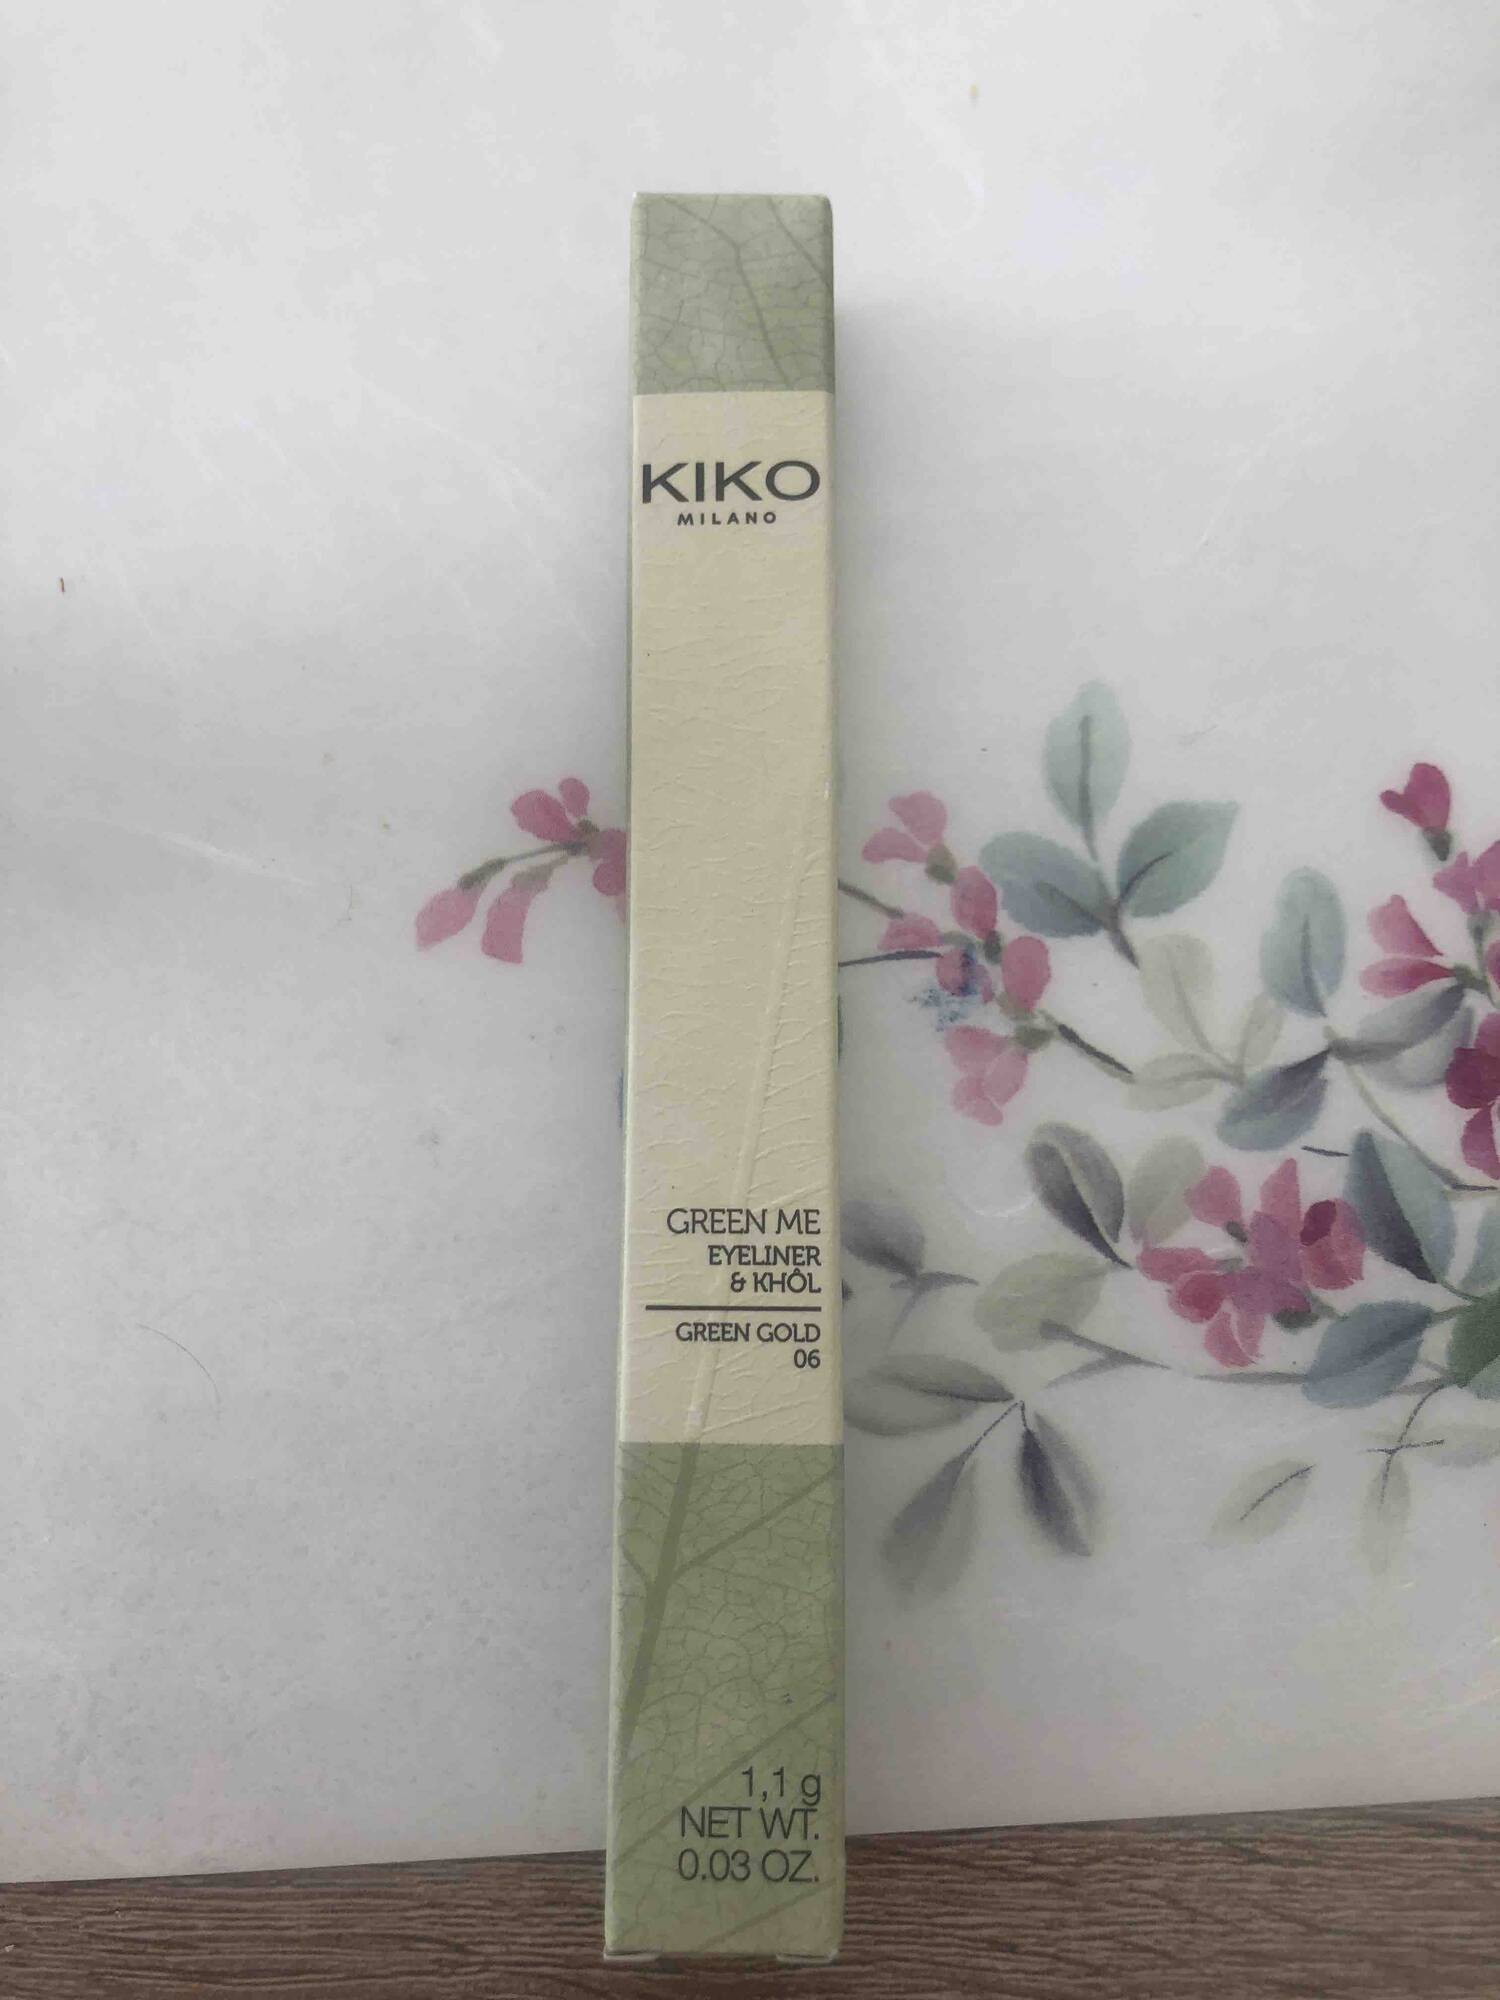 KIKO MILANO - Green me - Eyeliner & khol Green Gold 06